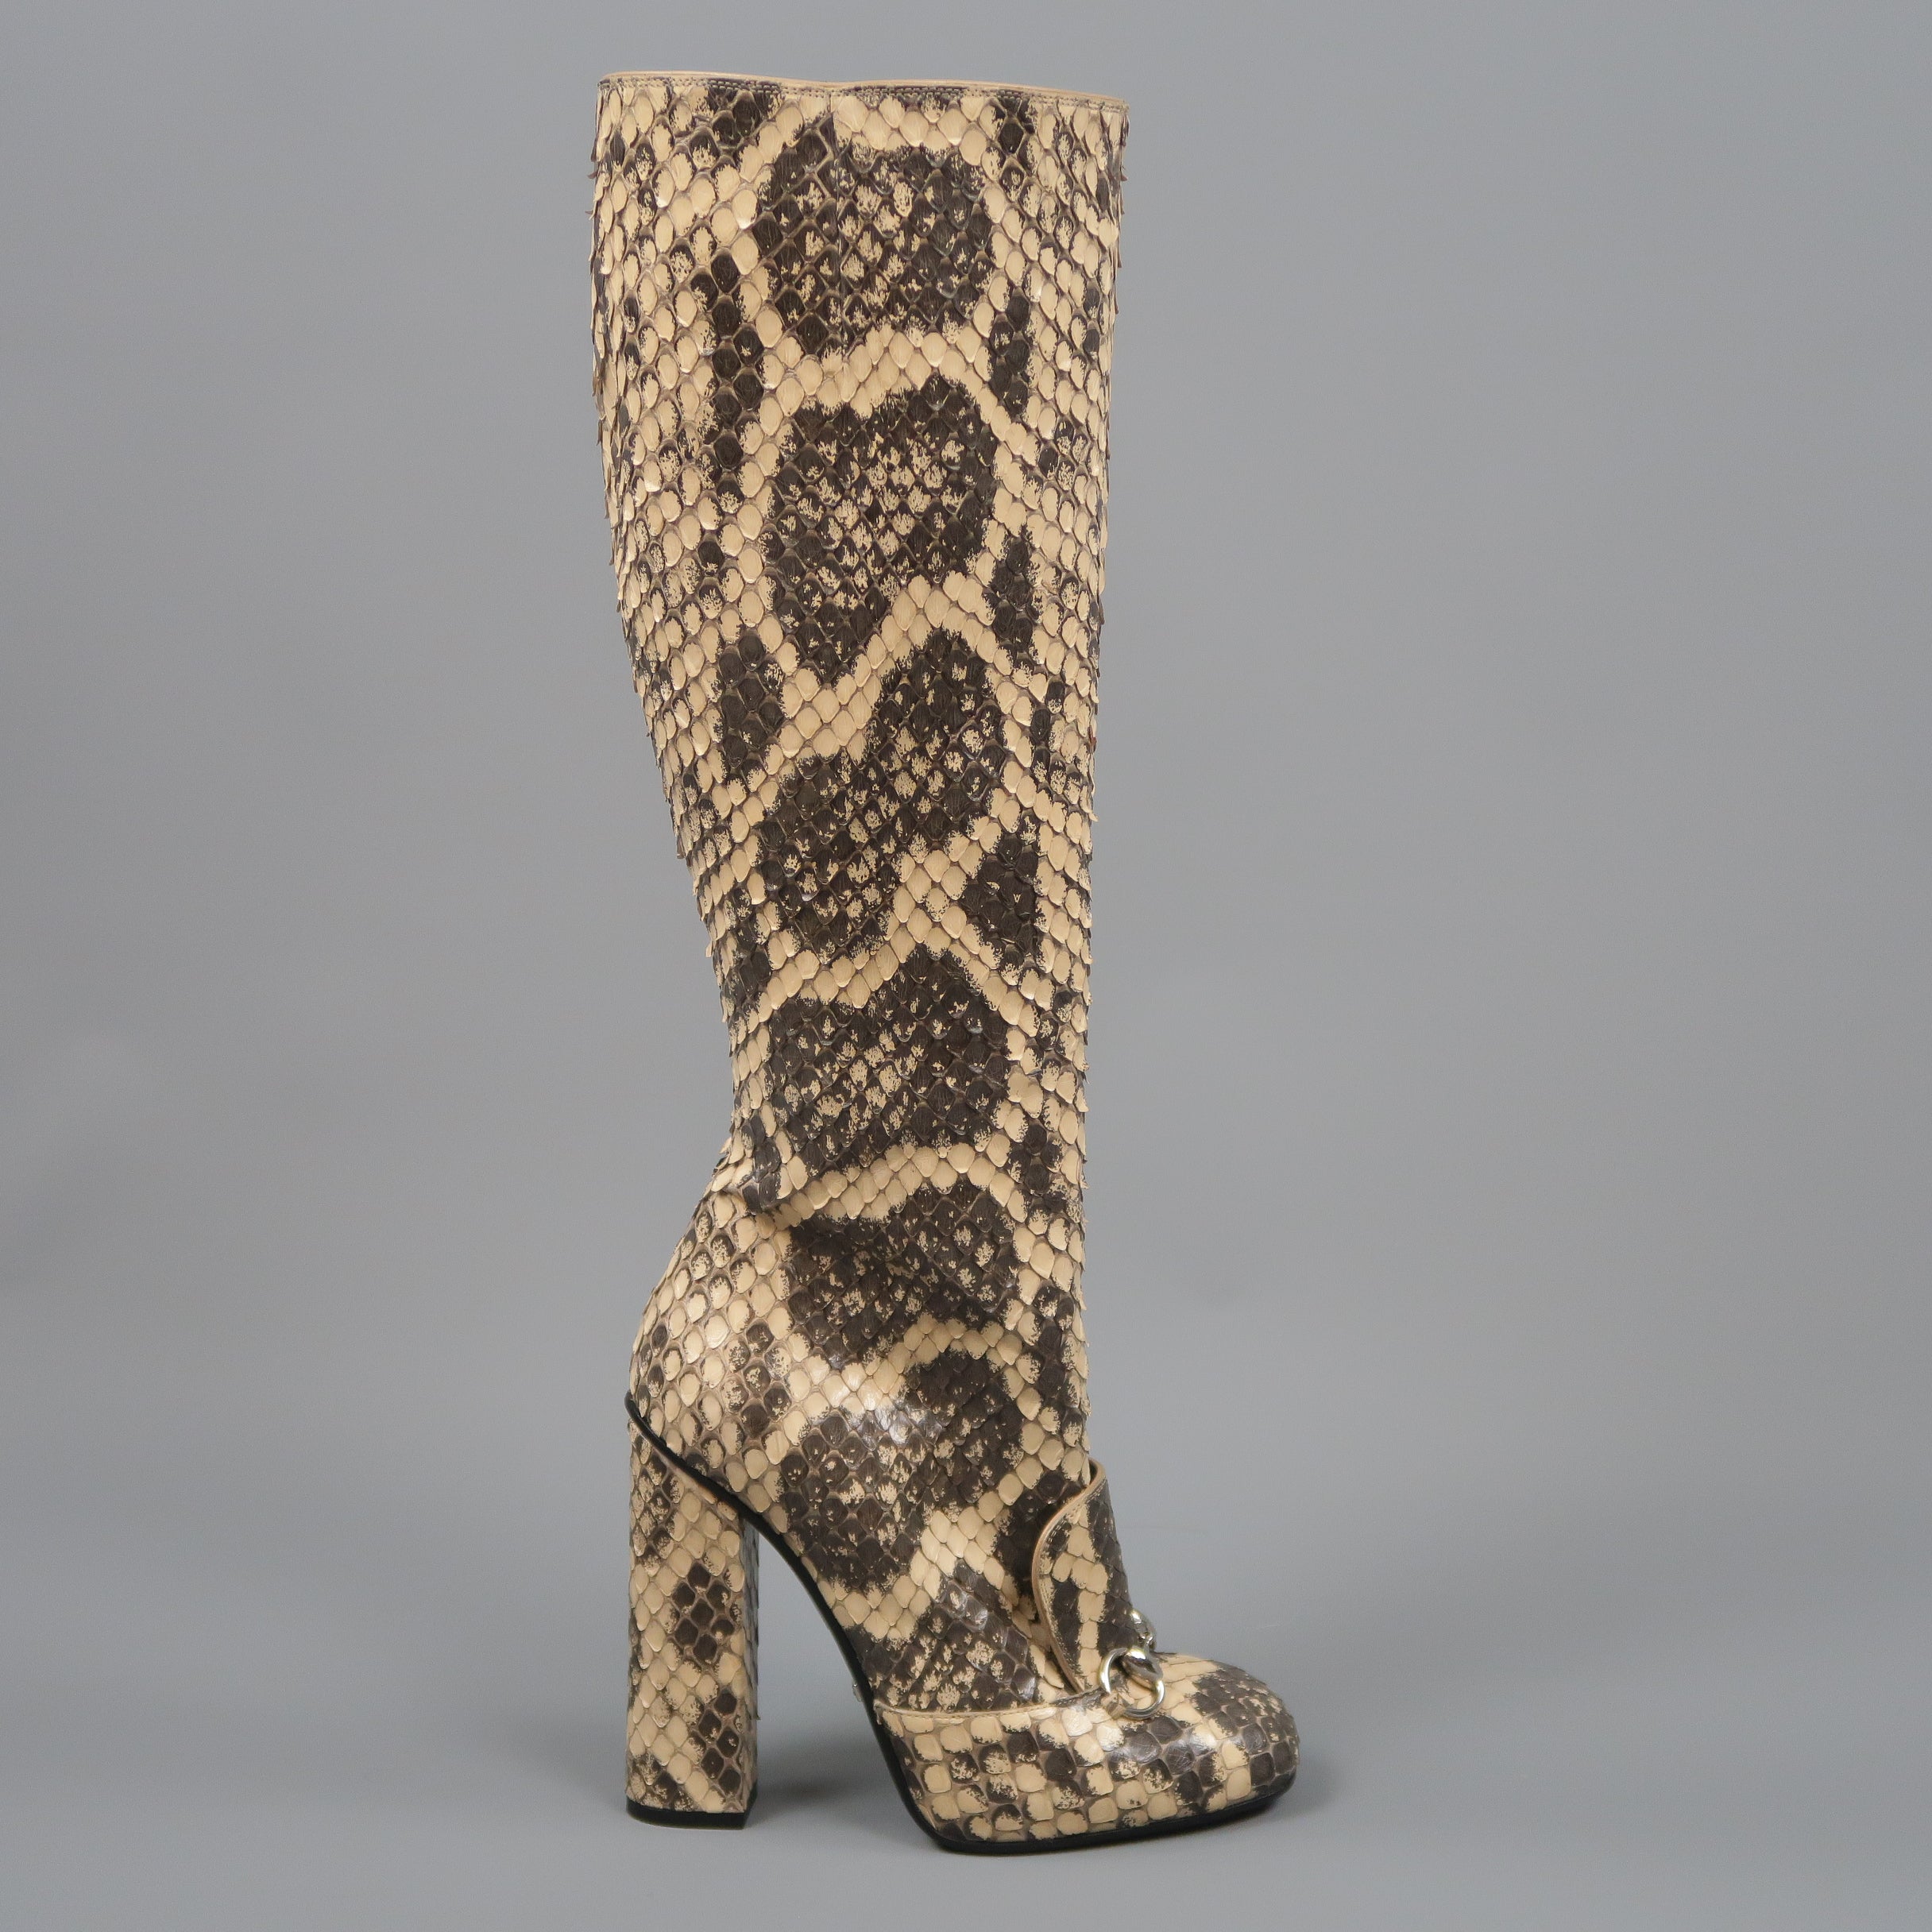 snakeskin boots knee high